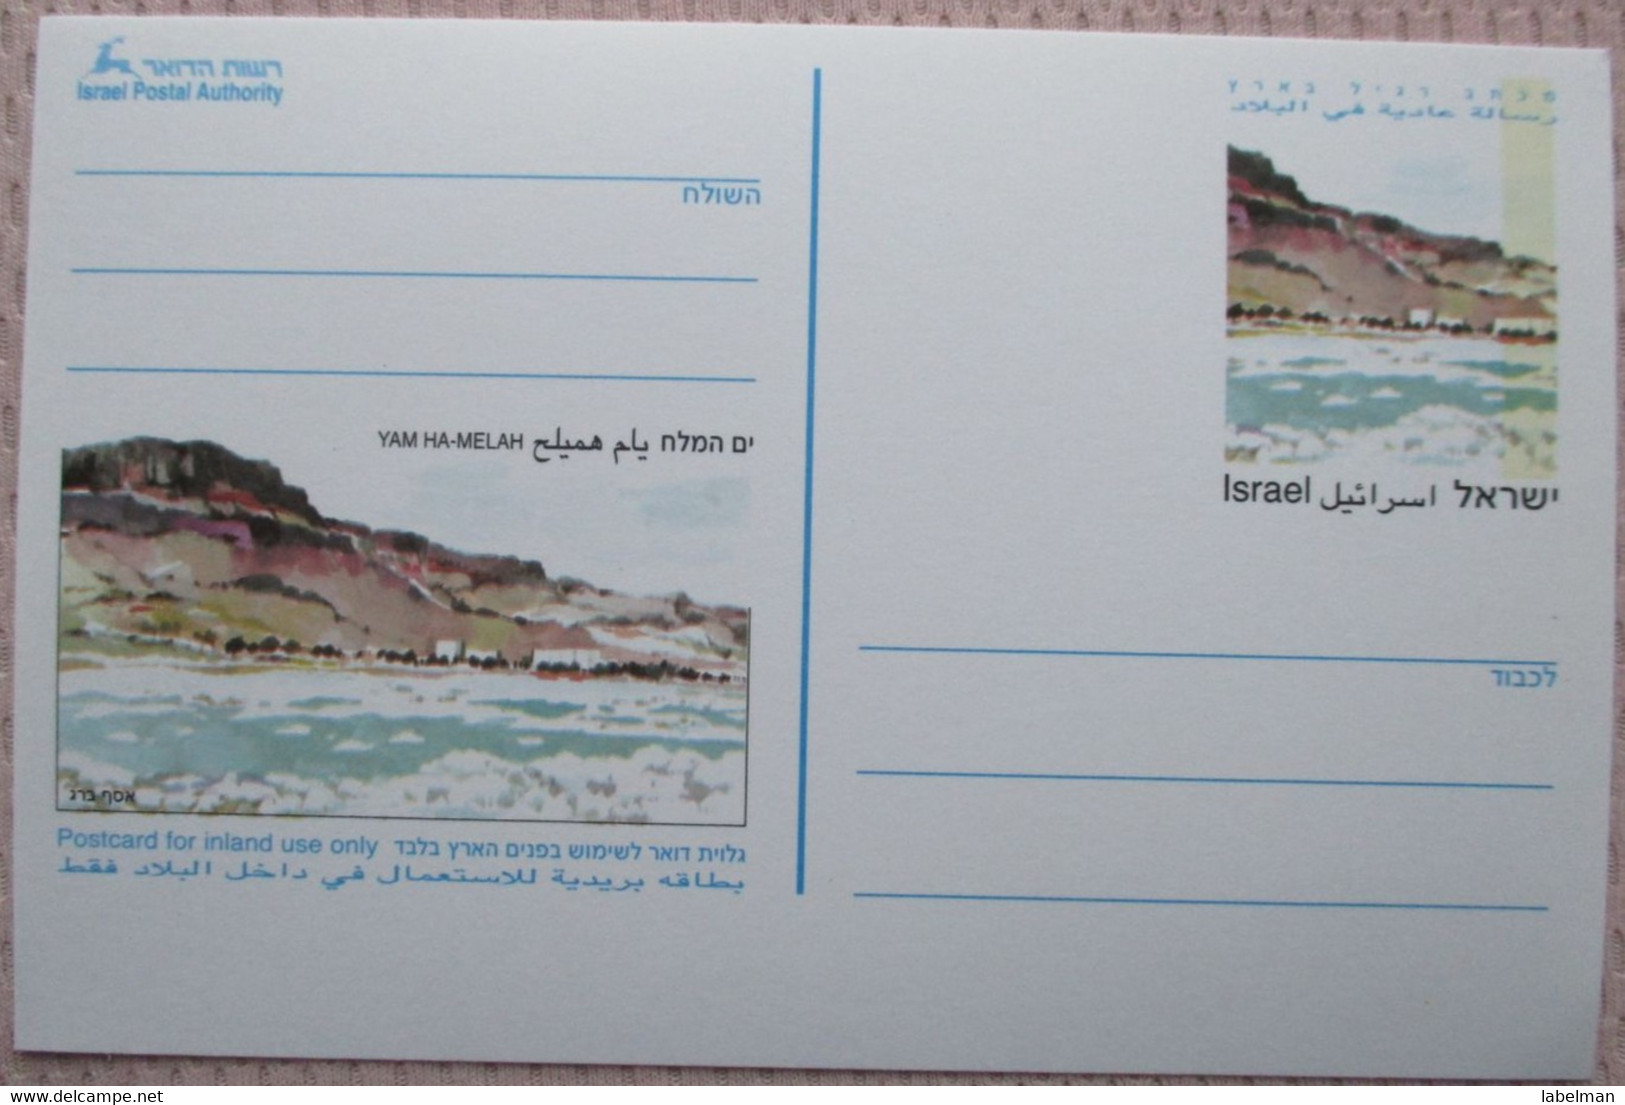 ISRAEL POSTAL AUTHORITY DEAD SEA DESERT INLAND PREPAID POSTCARD POSTKARTE CARD ANSICHTSKARTE CARTOLINA CARTE POSTALE PC - Maximumkaarten